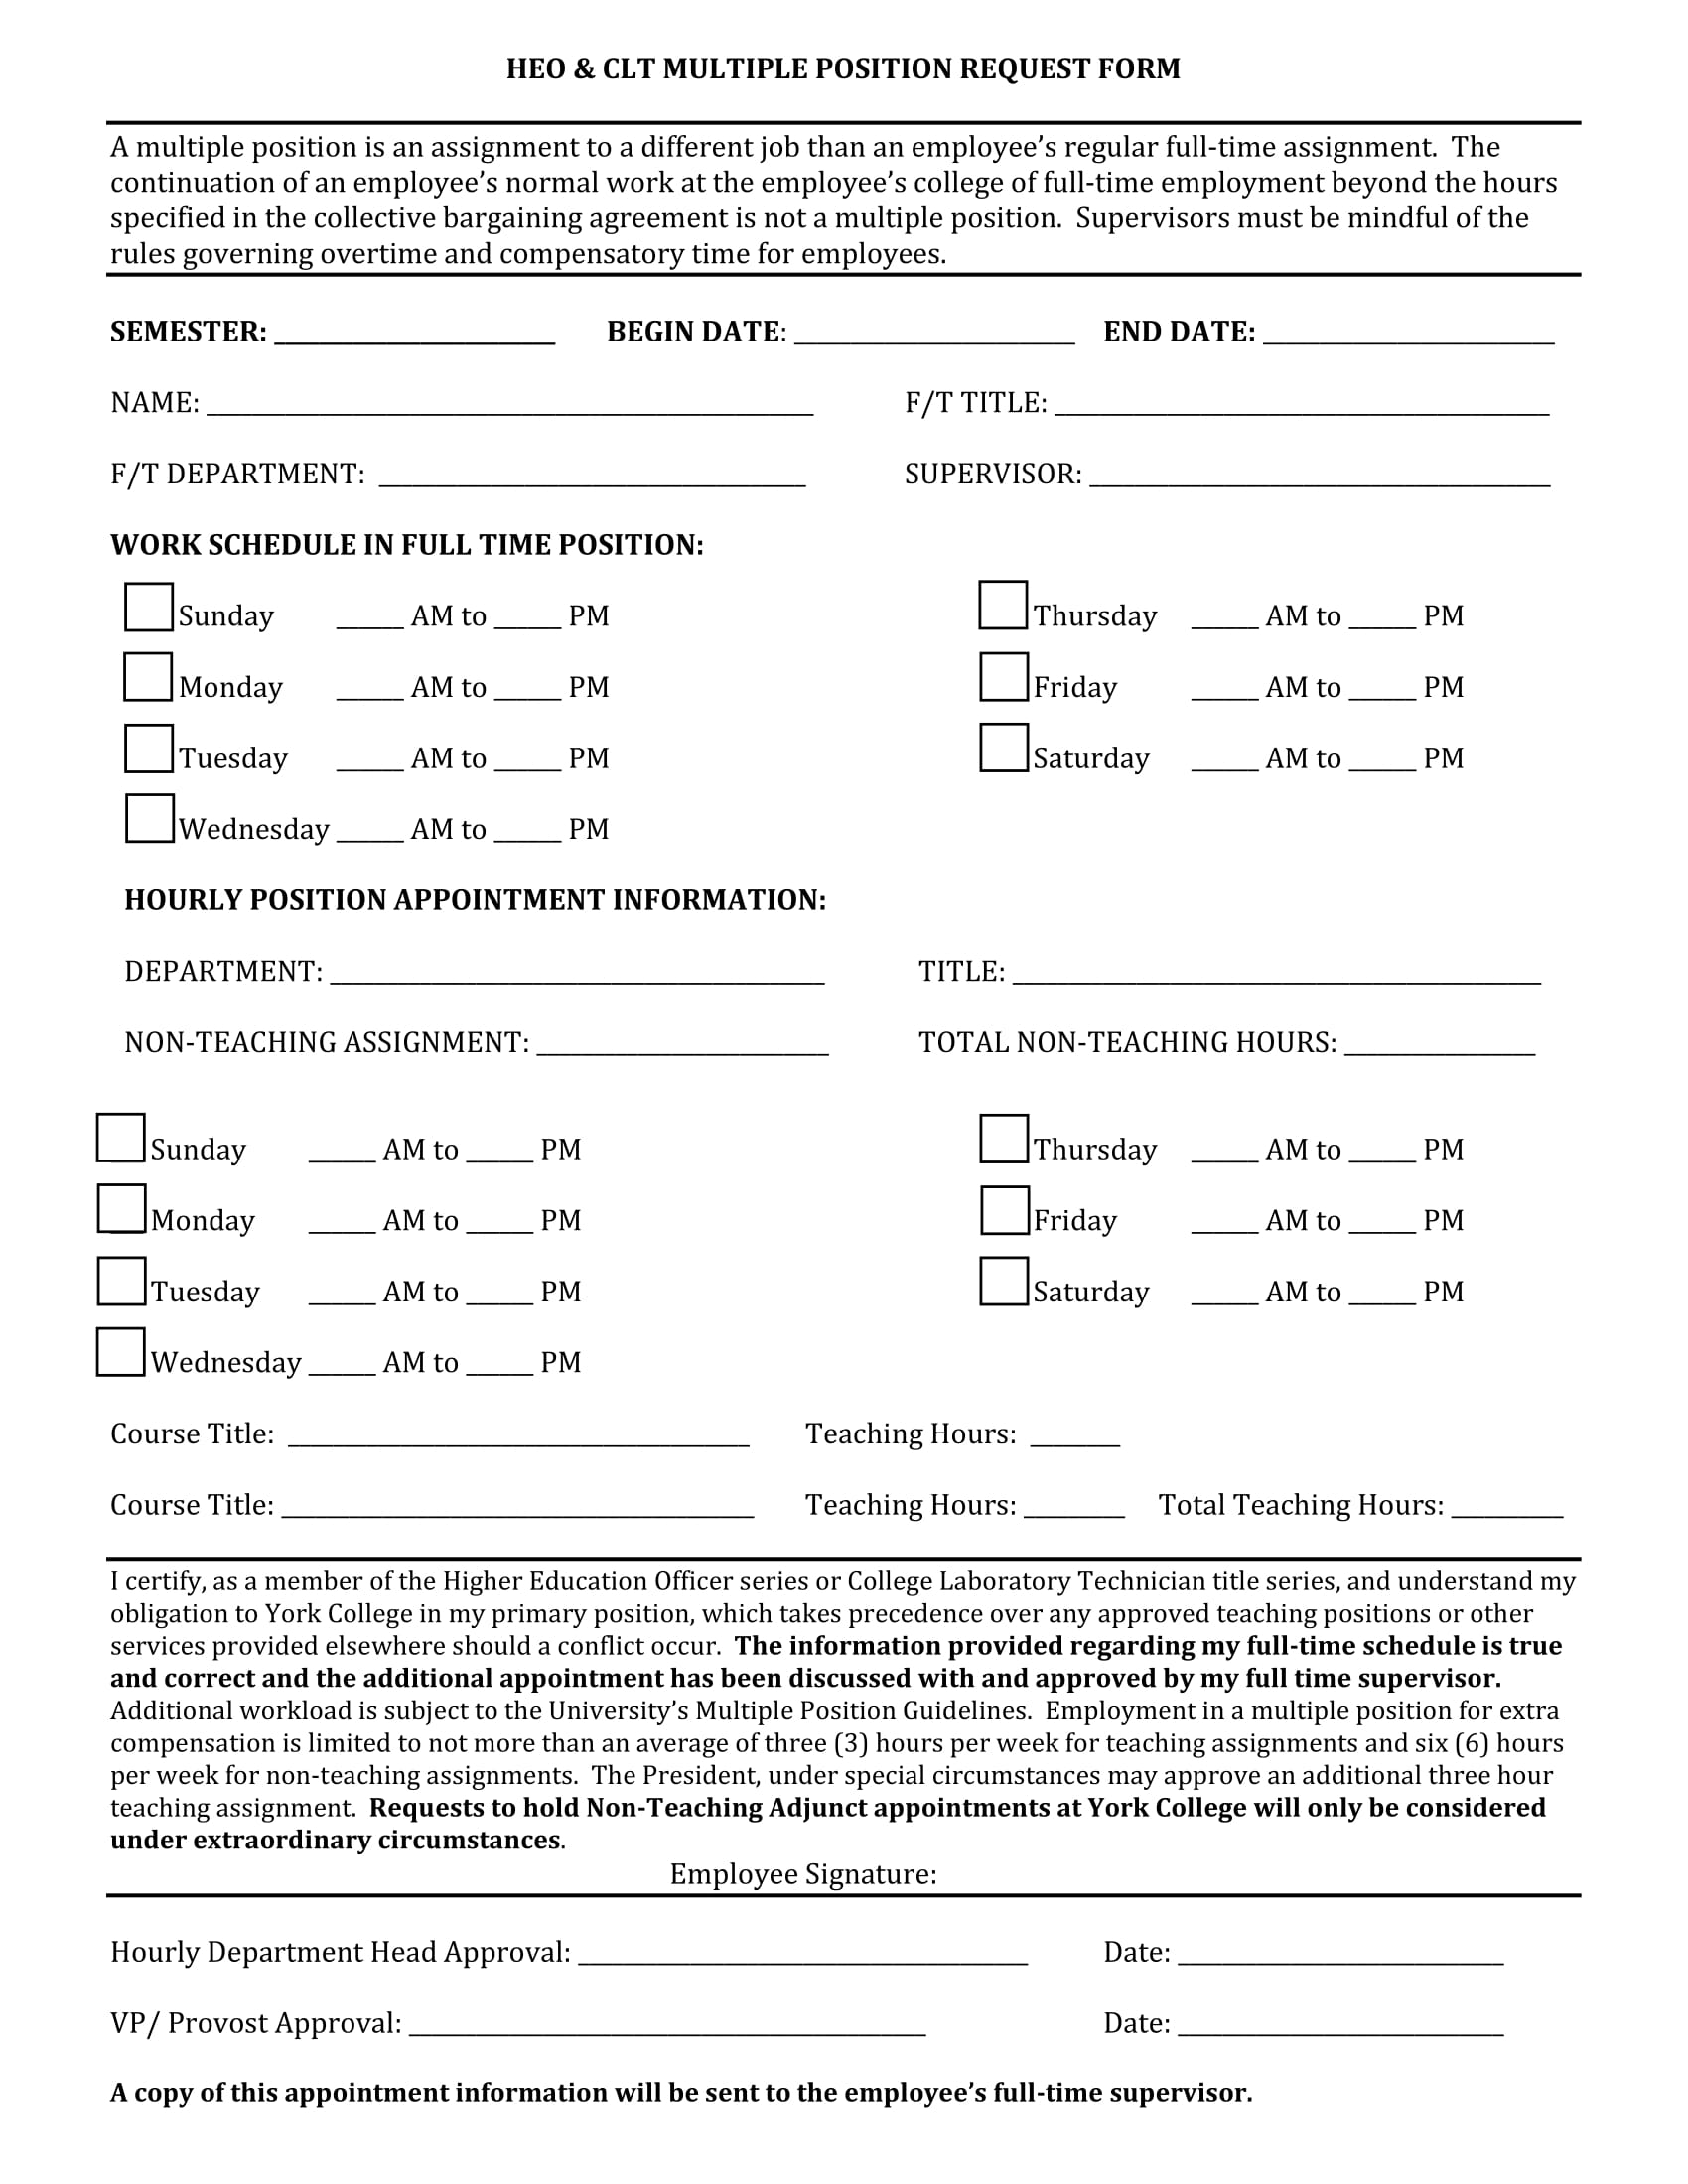 multiple position request form 1